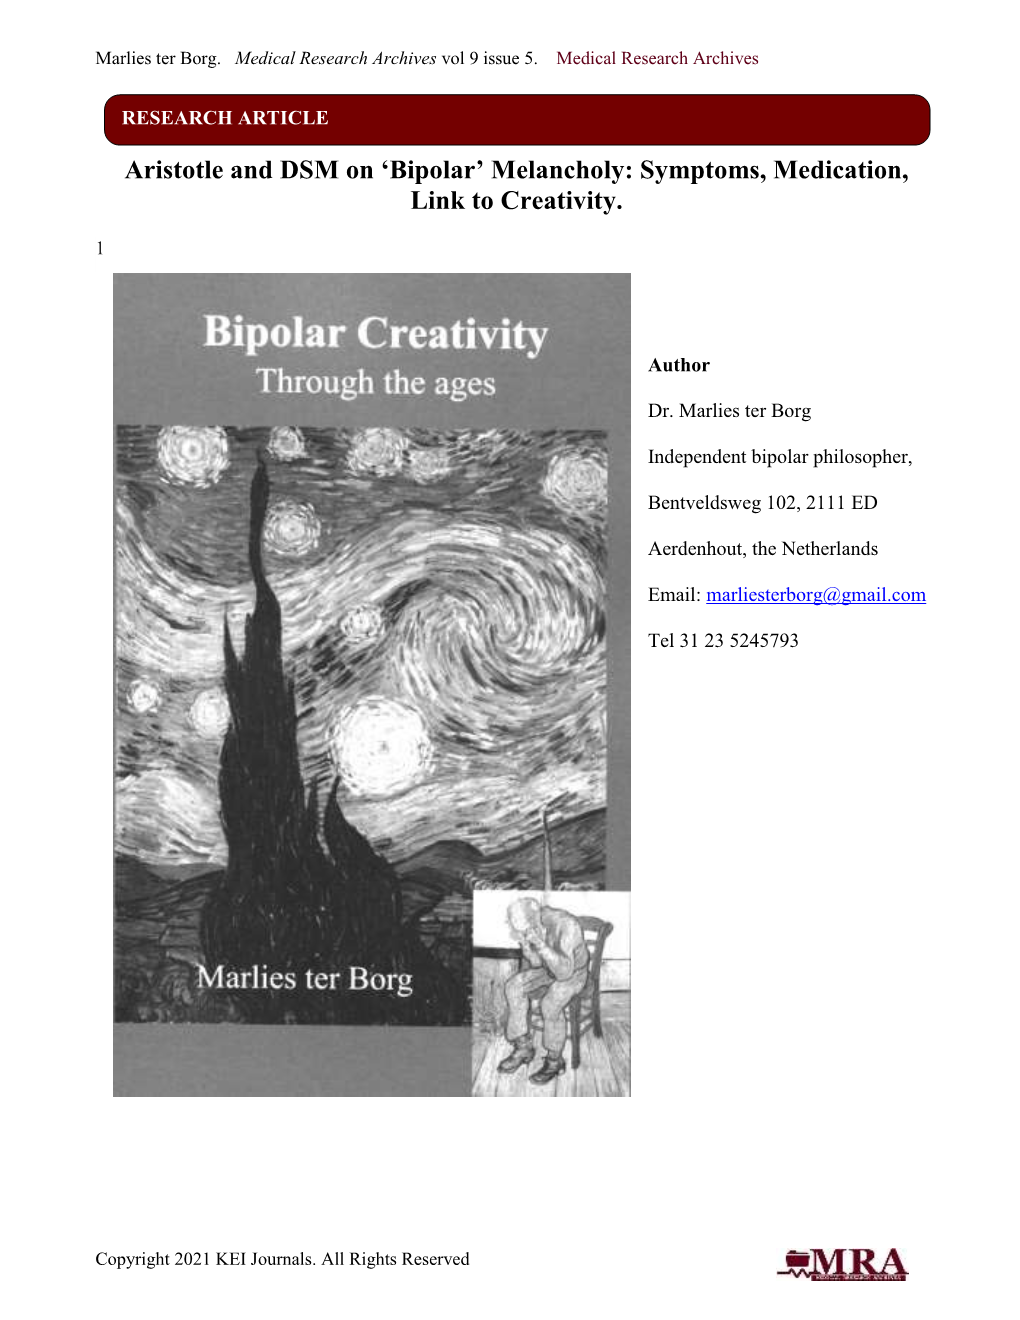 Aristotle and DSM on 'Bipolar' Melancholy: Symptoms, Medication